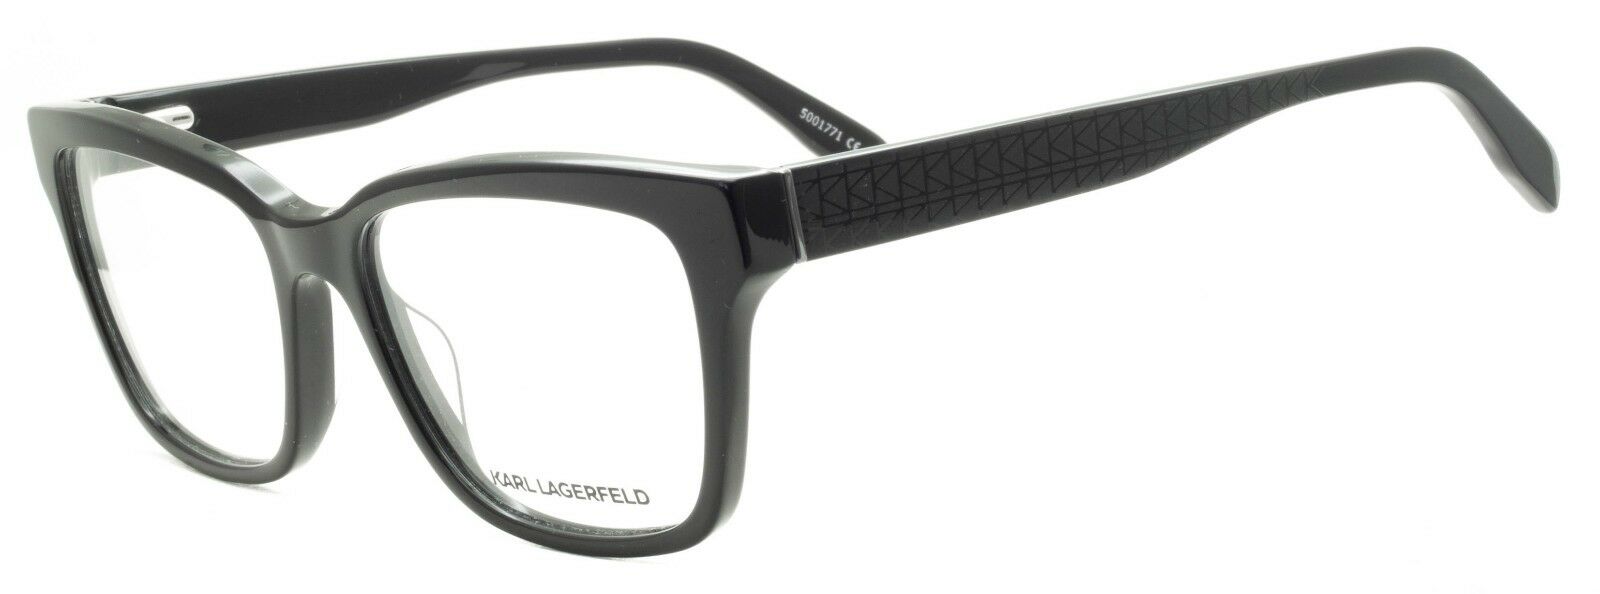 KARL LAGERFELD KL 42 52mm Eyewear FRAMES RX Eyeglasses - New - GGV Eyewear